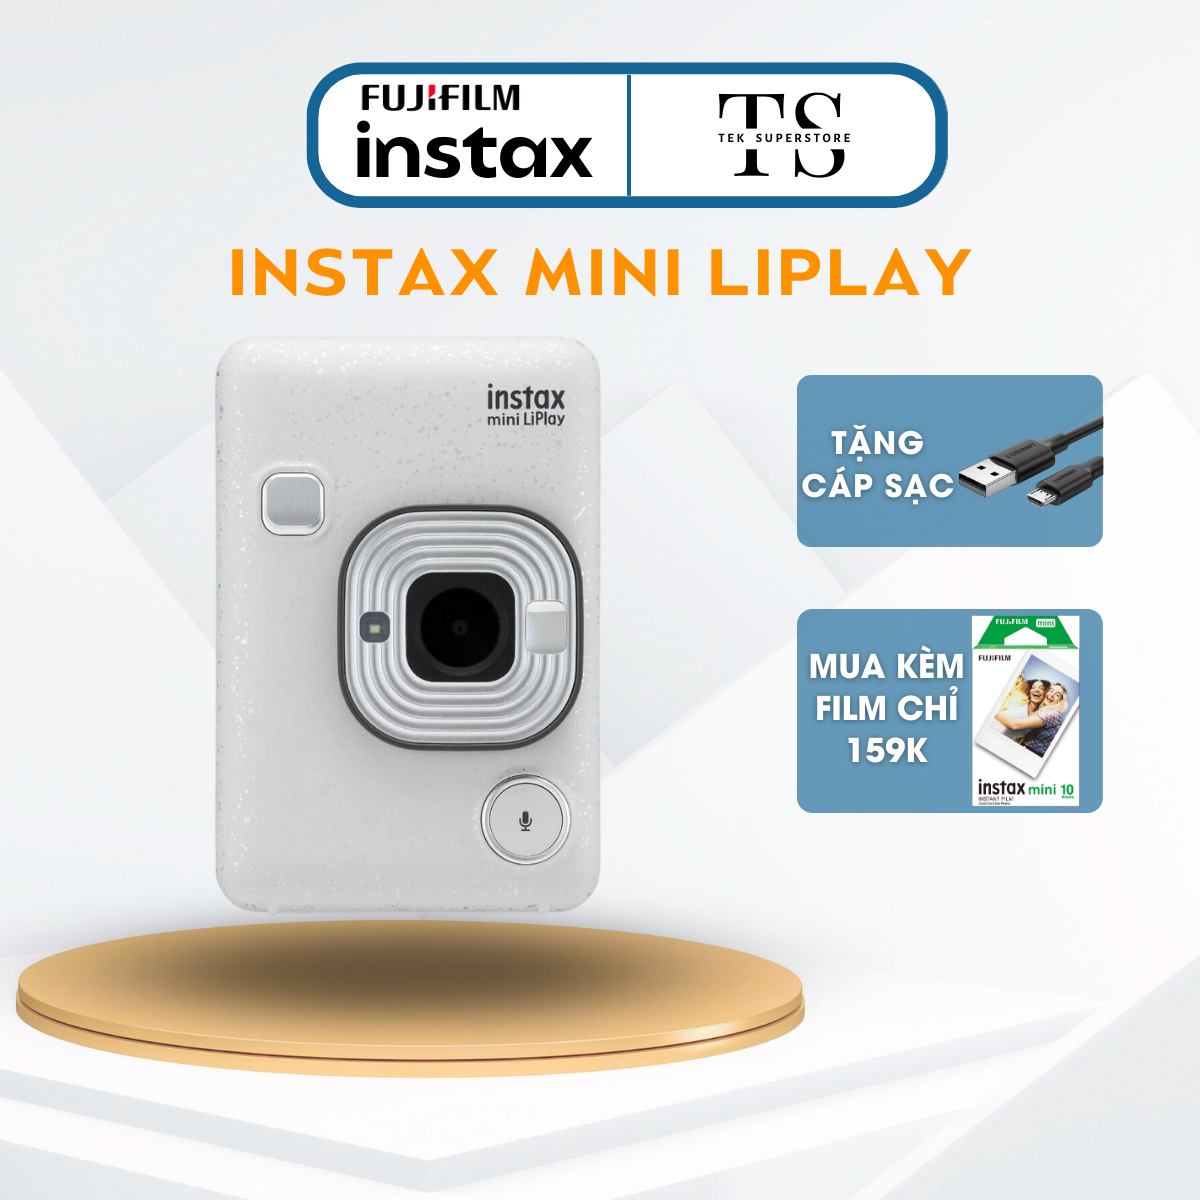 Instax Mini LiPlay - Máy chụp ảnh và in lấy liền Fujifilm Instax Mini